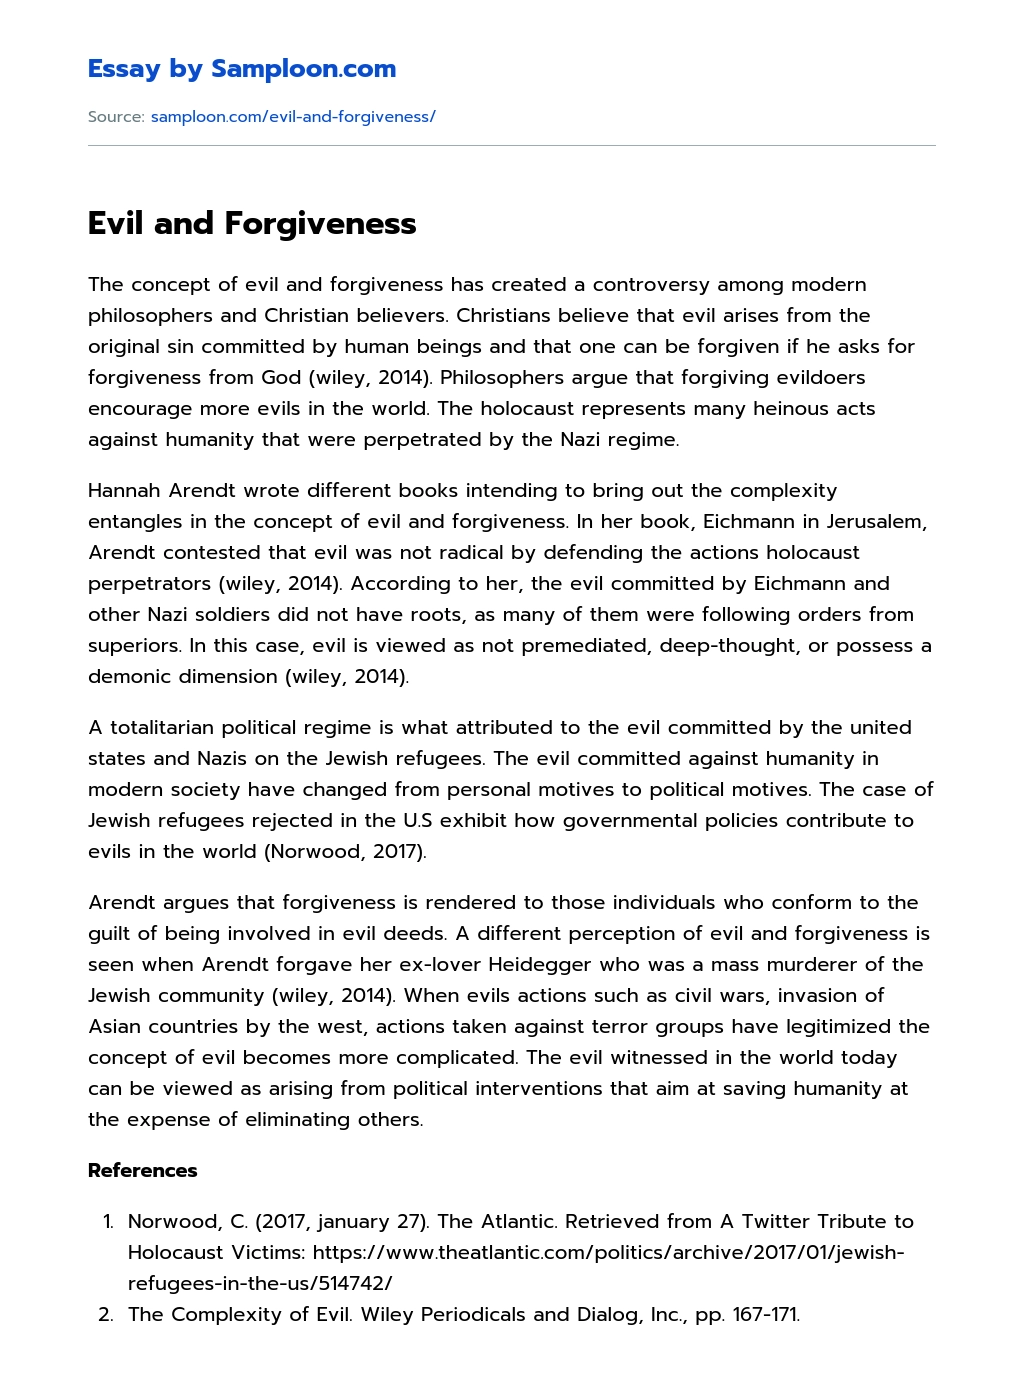 Evil and Forgiveness essay